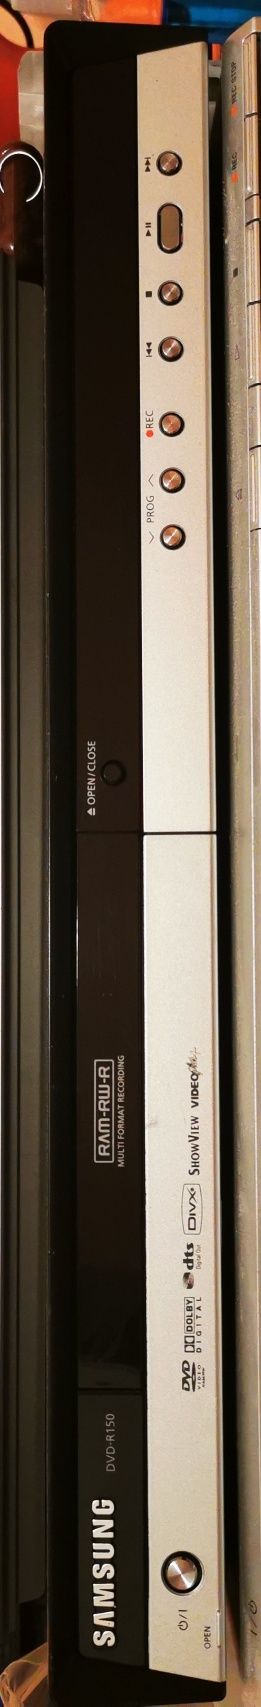 DVD recorder Samsung R150